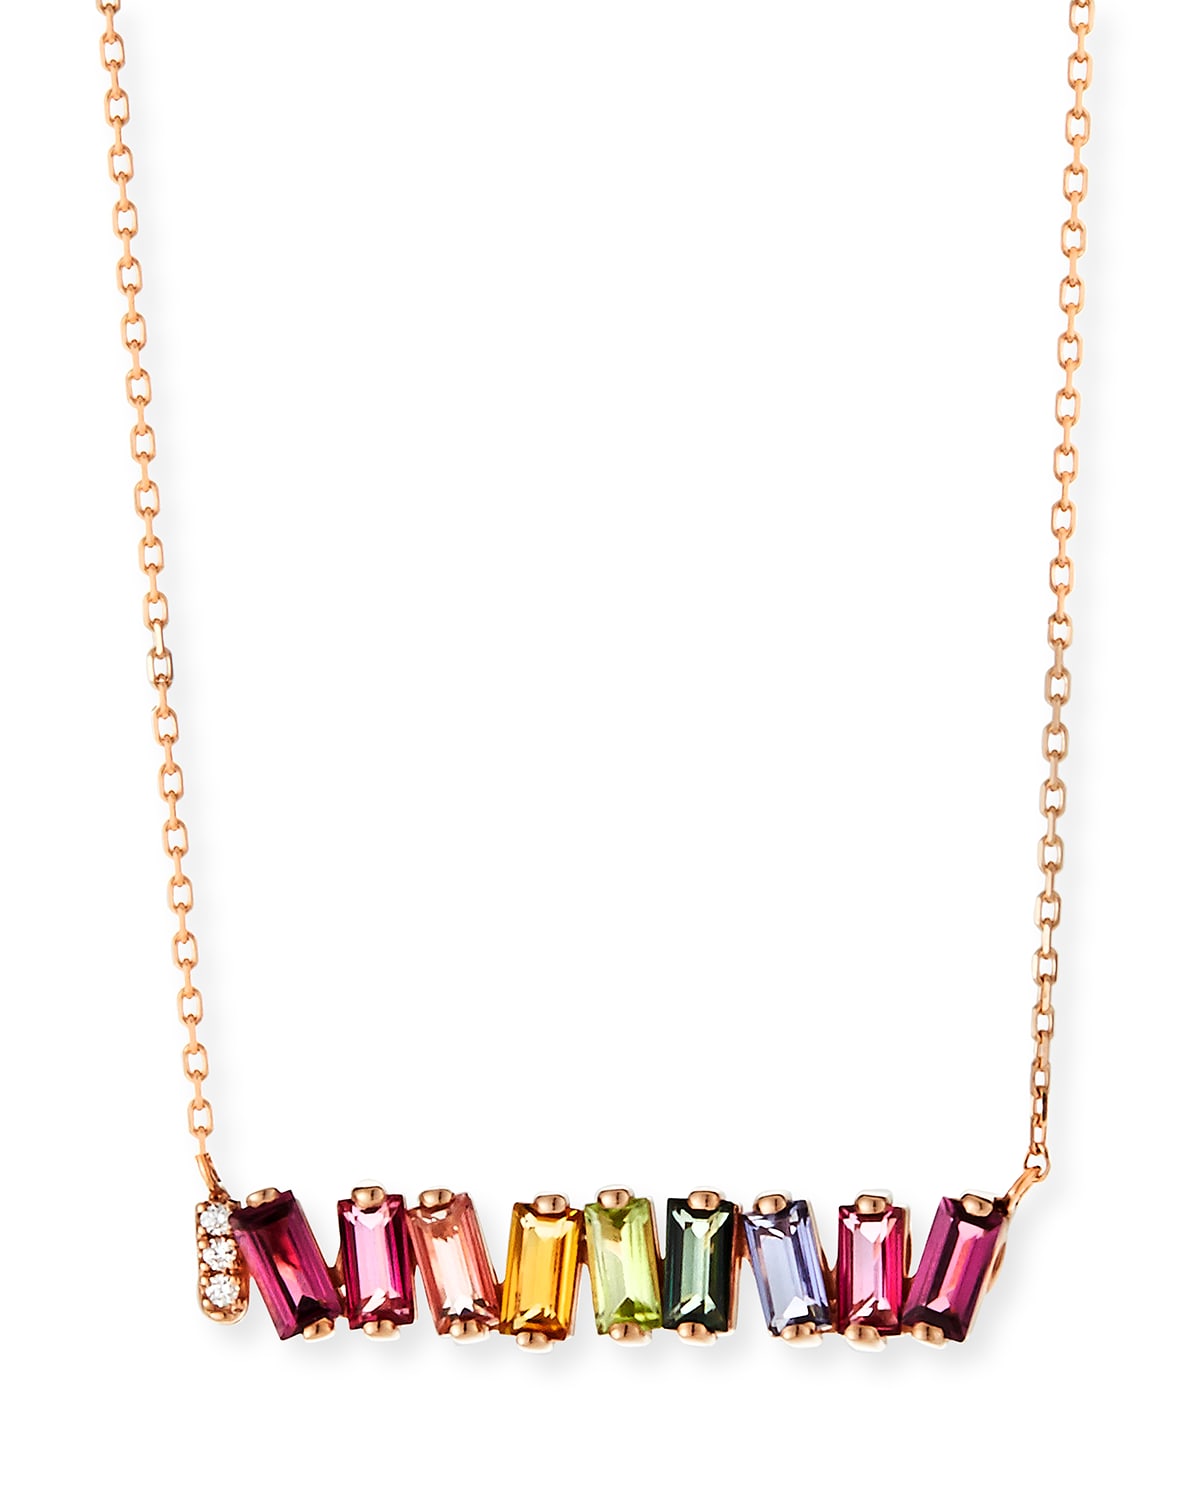 KALAN by Suzanne Kalan 14K Rose Gold Rainbow Bar Necklace w/ Diamonds